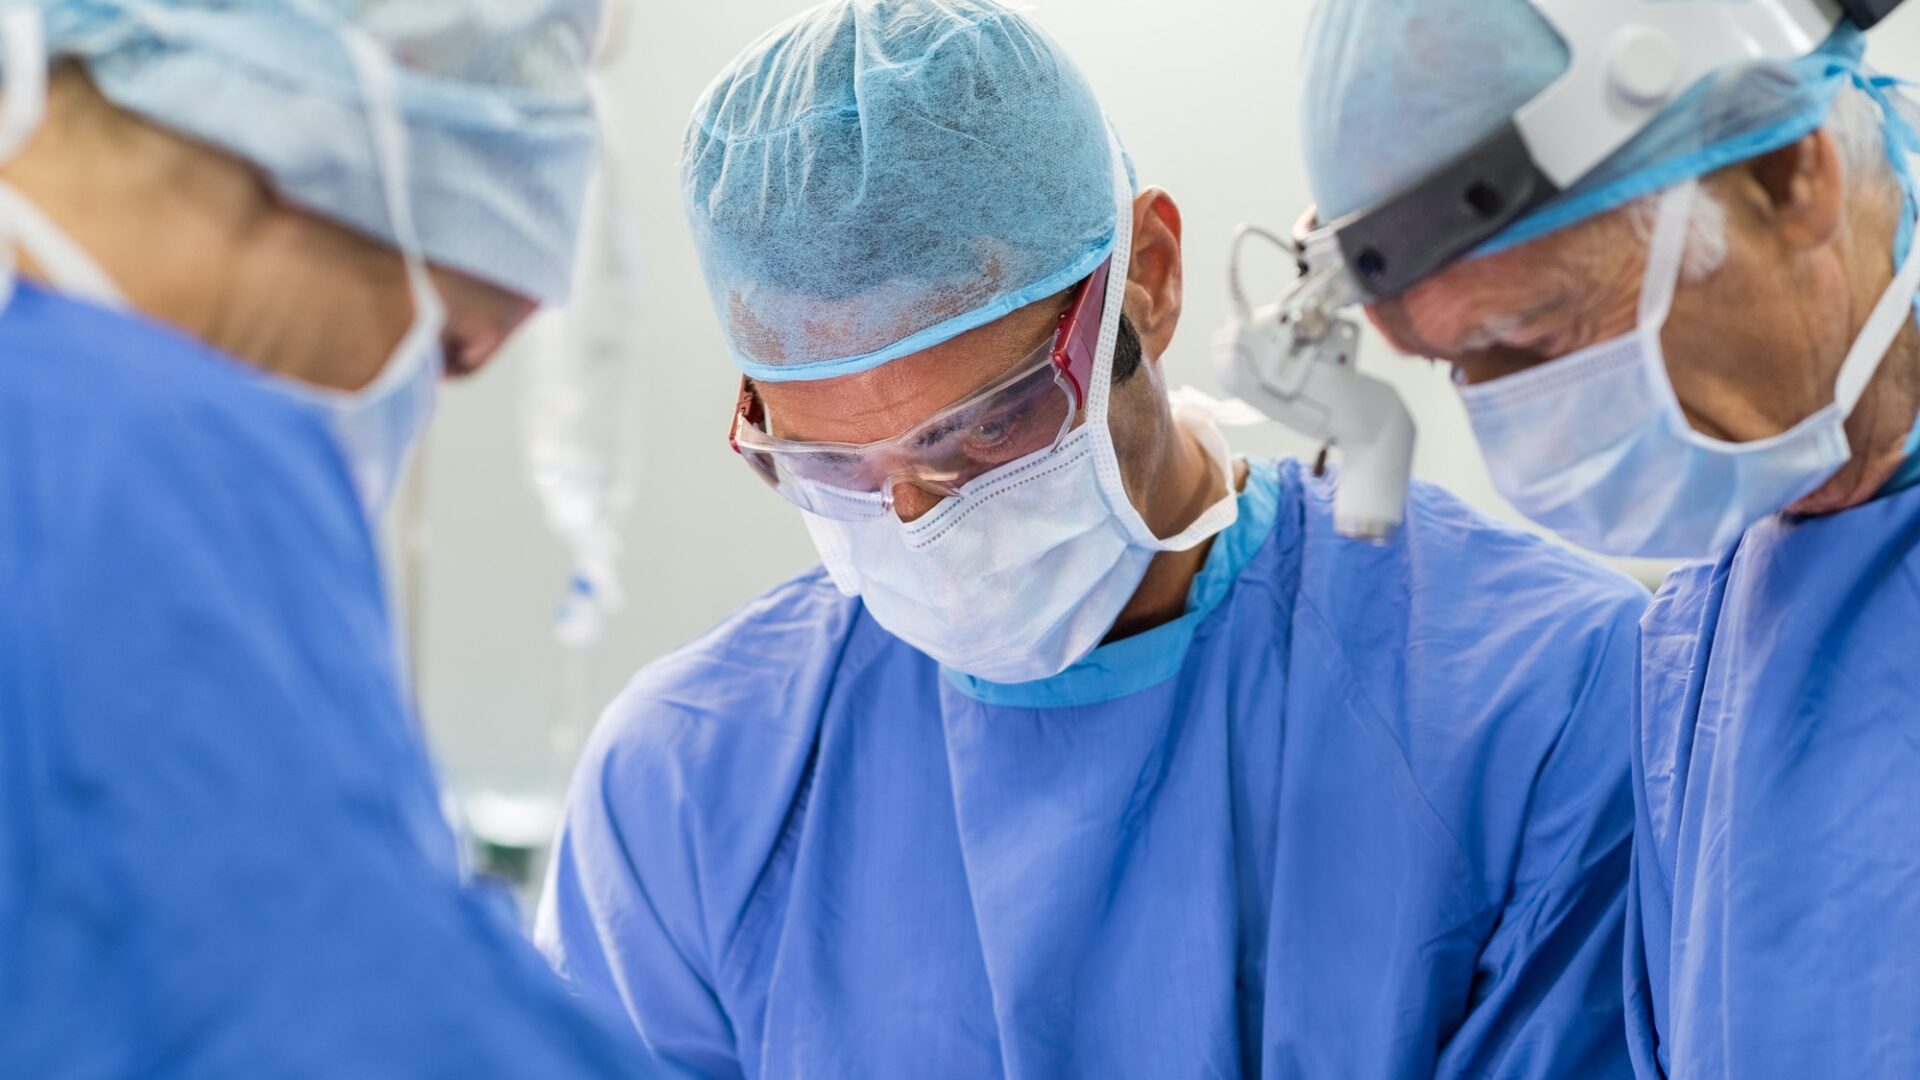 Team of surgeons operating